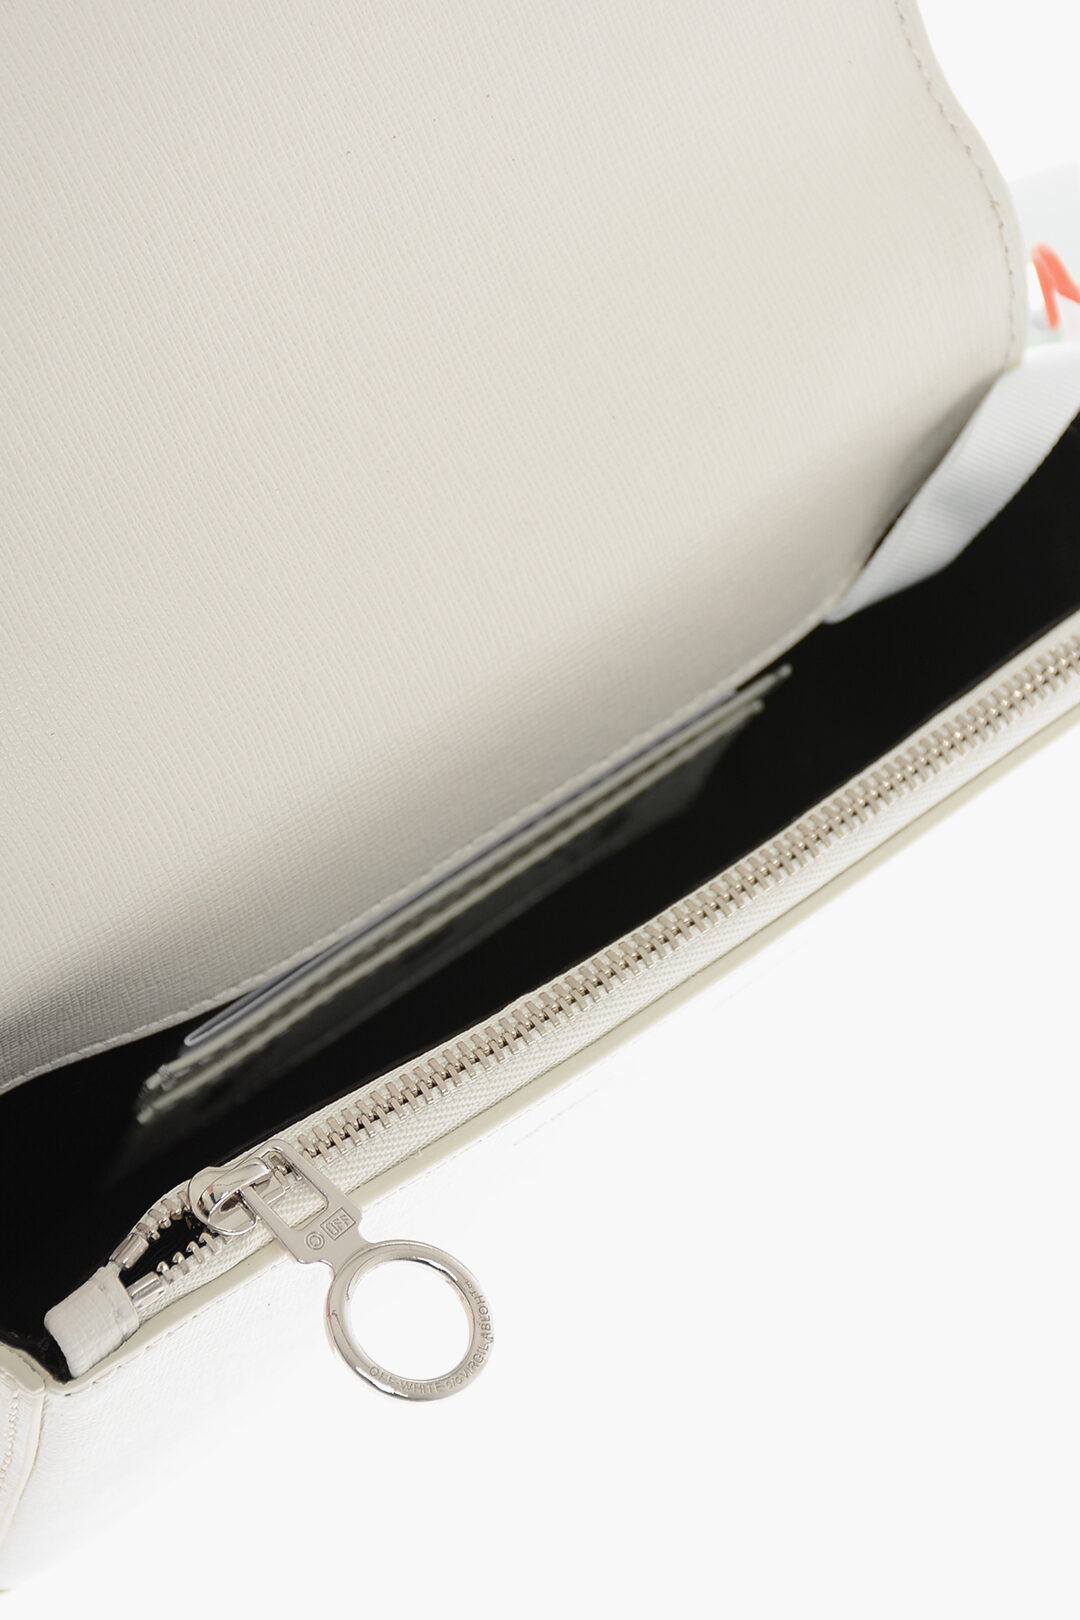 Soft Leather Mini Tote Bags For Women, Luxury Fashion Crossbody Handbag,  Multi Color Purse Satchels Bag Dupe From Xiaomiyoupinltd, $17.53 |  DHgate.Com